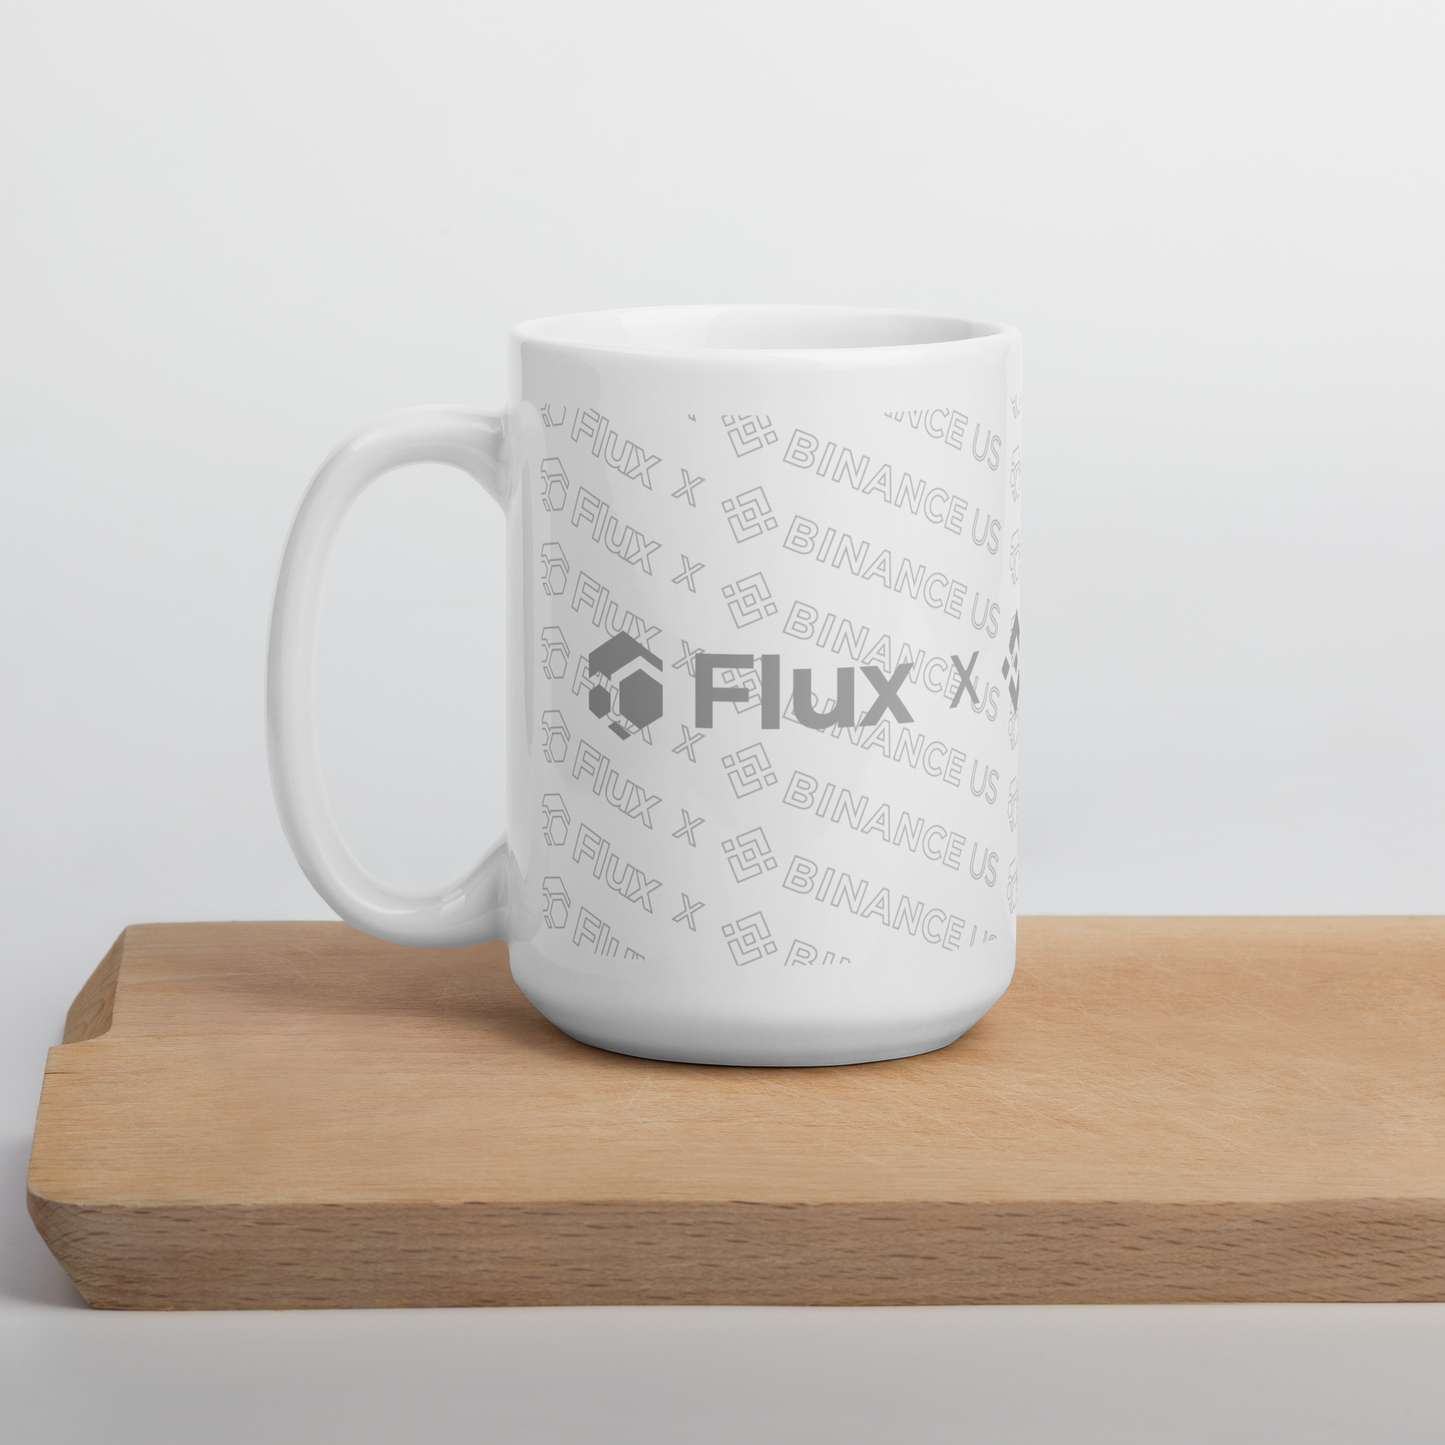 FLUX "Flux x Binance.US" White Glossy Mug